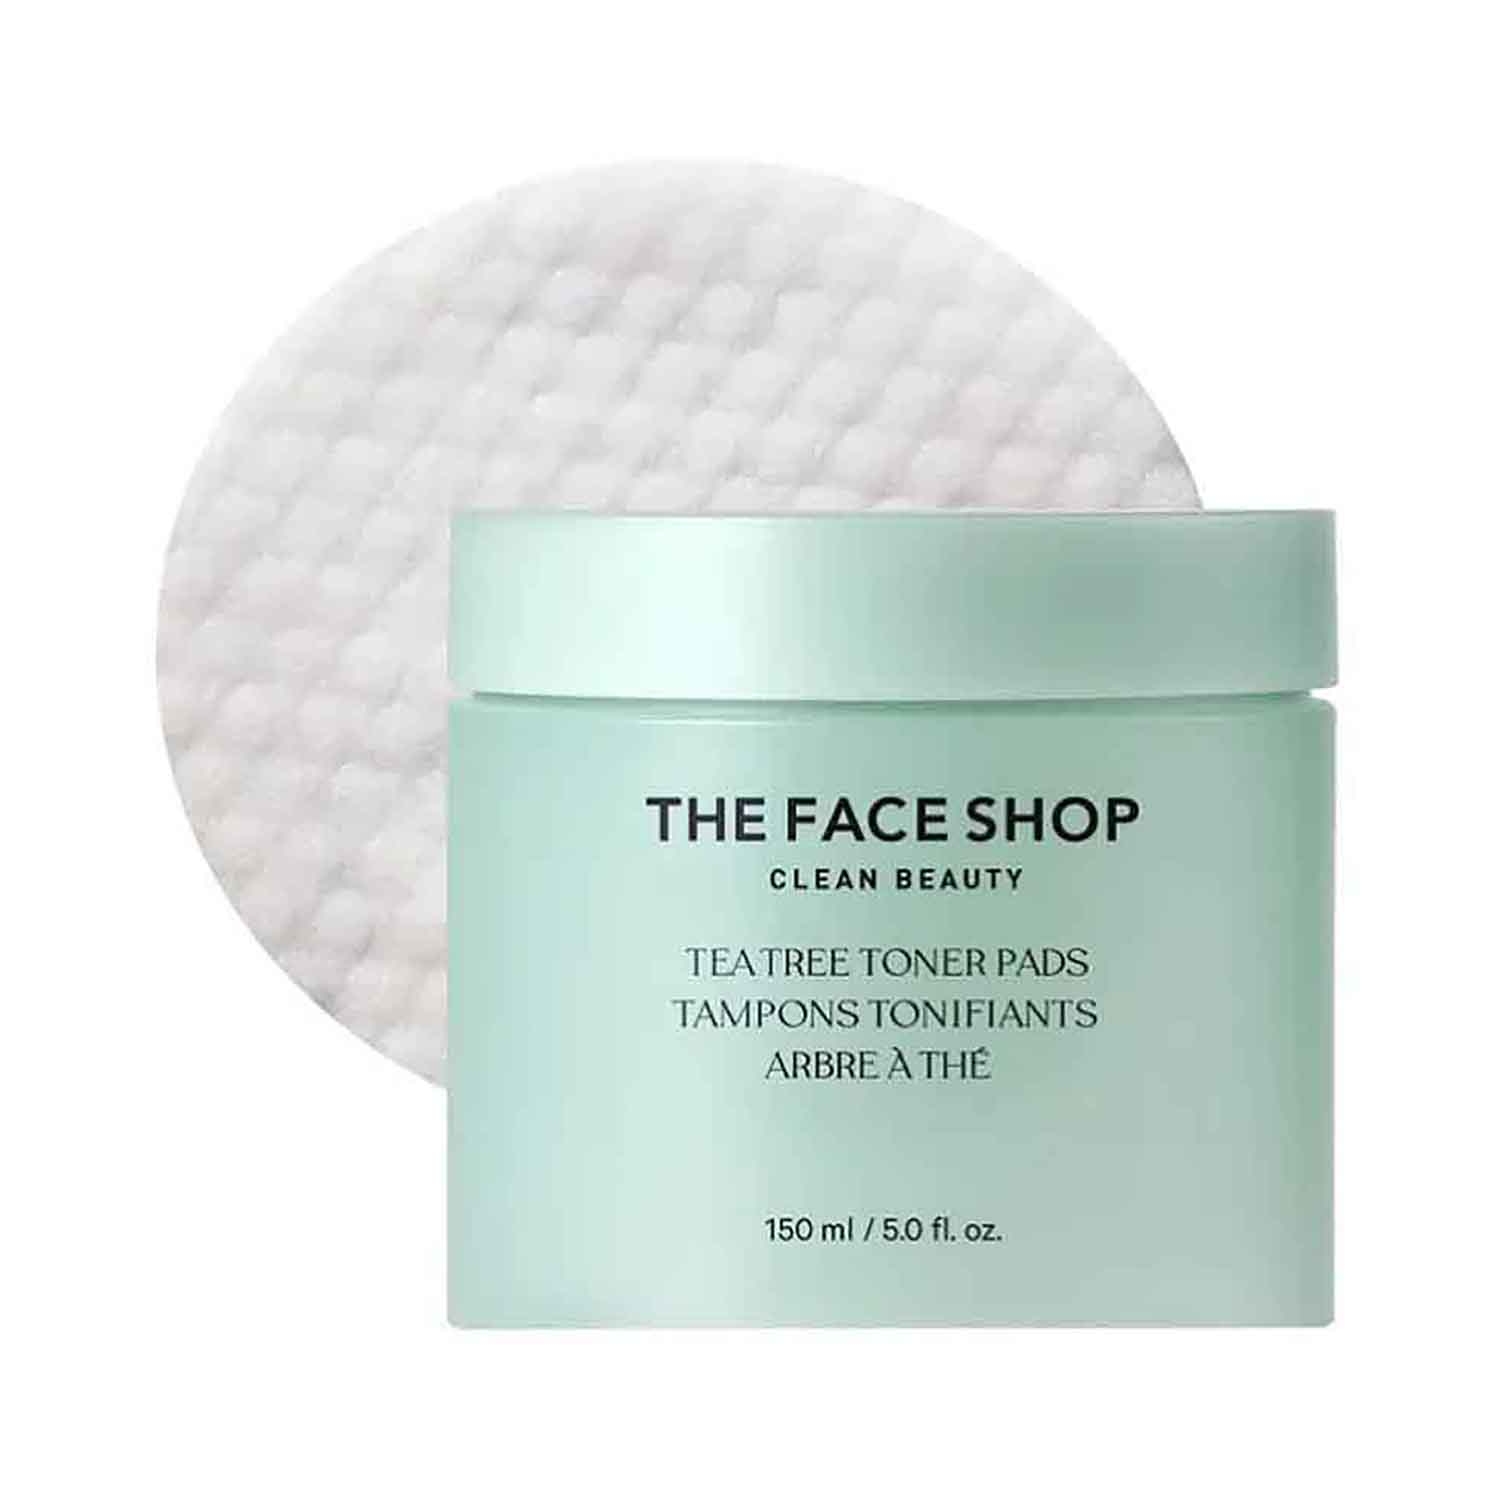 The Face Shop | The Face Shop Tea Tree Toner Pads (150ml)